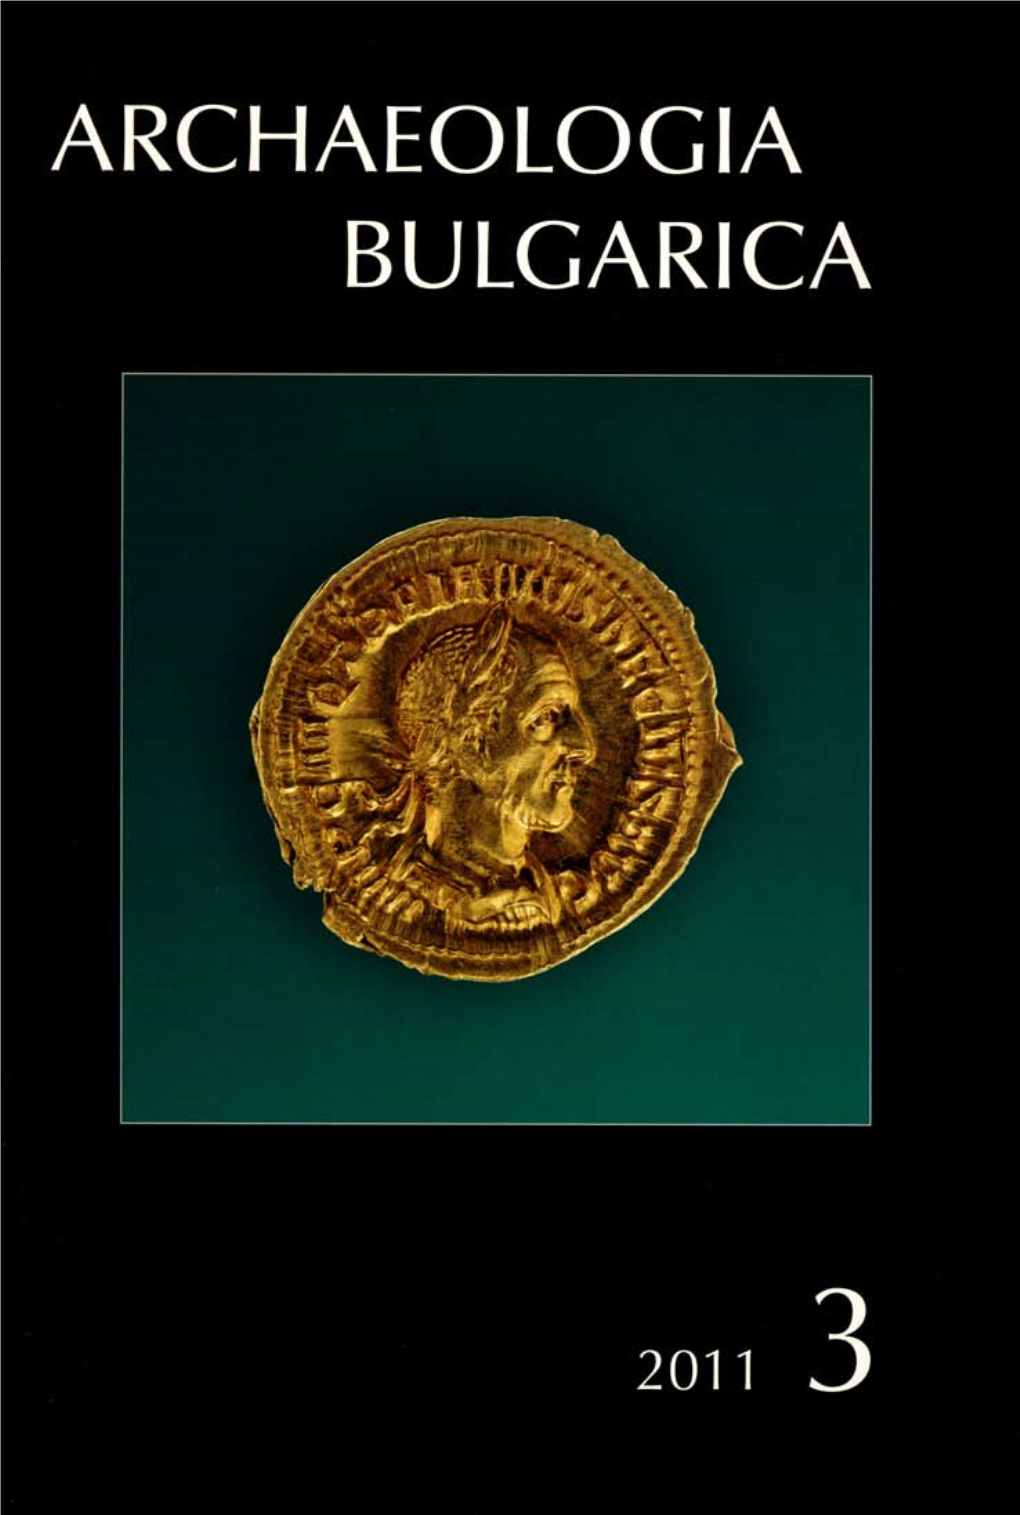 PDF Website Archelogia Bulga